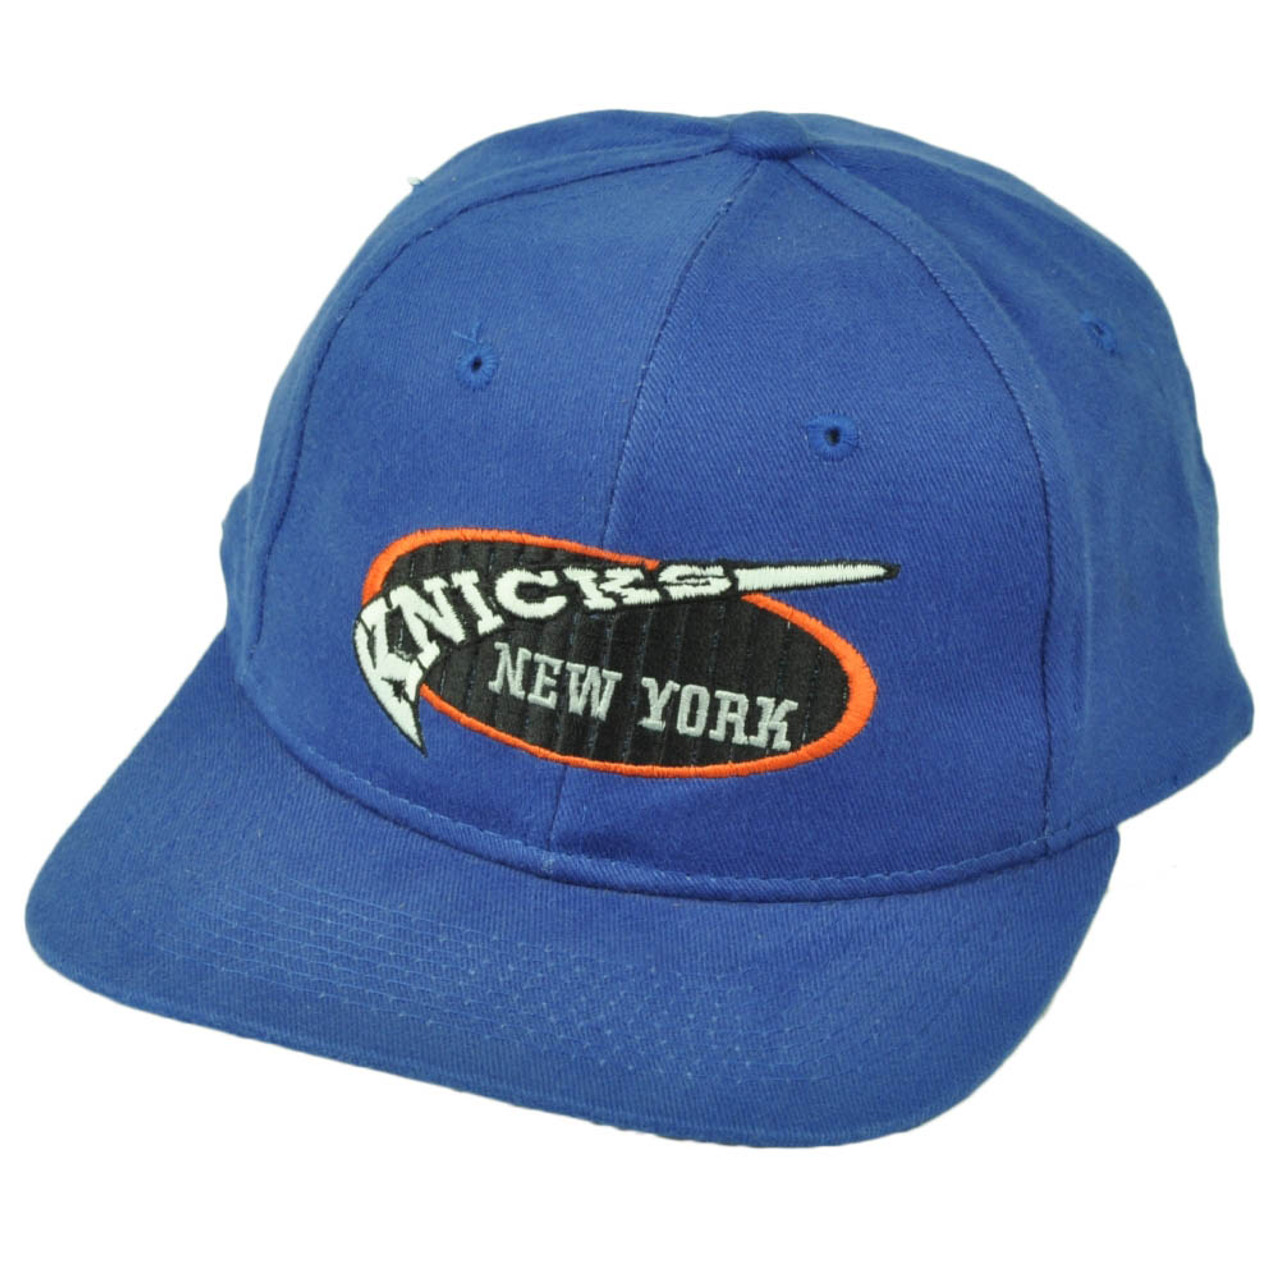 New York KNICKS Vintage 90s Snapback Hat Deadstock by AJD 